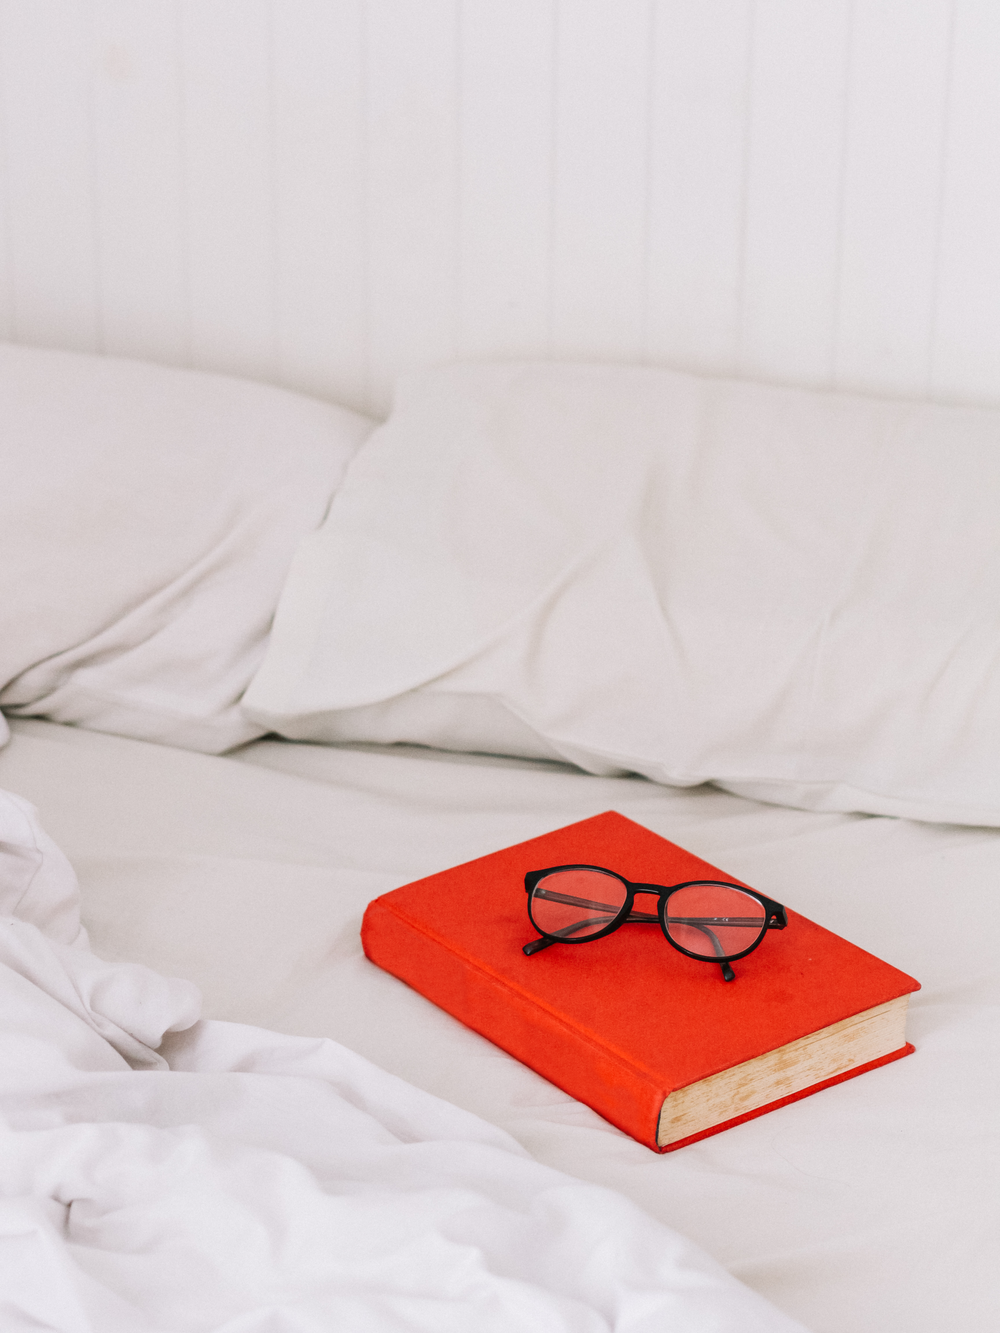 black framed eyeglasses on orange book